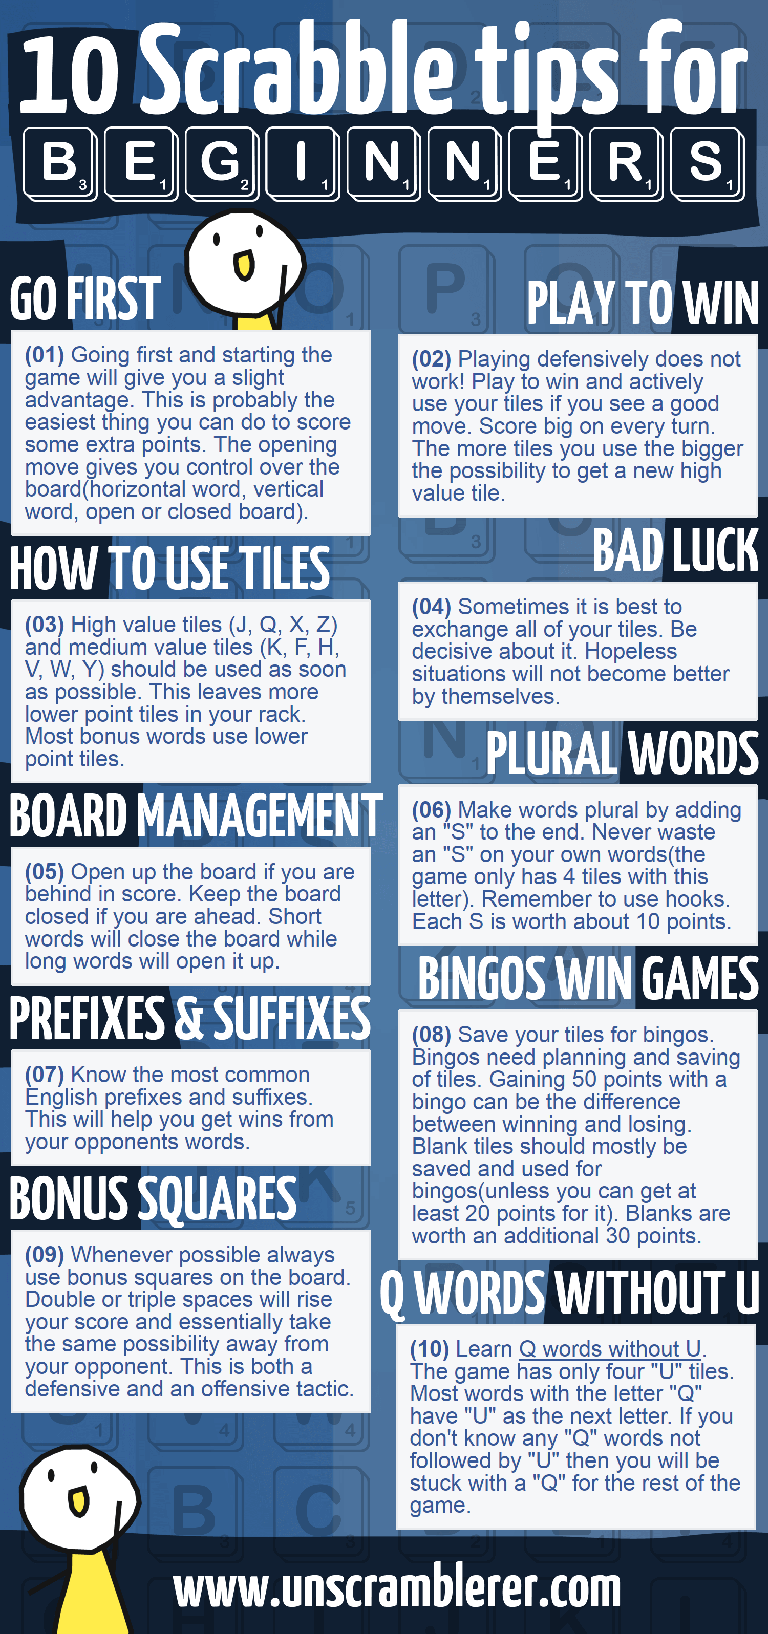 Scrabble Tips for Beginners - Unscramblerer.com - Infographic